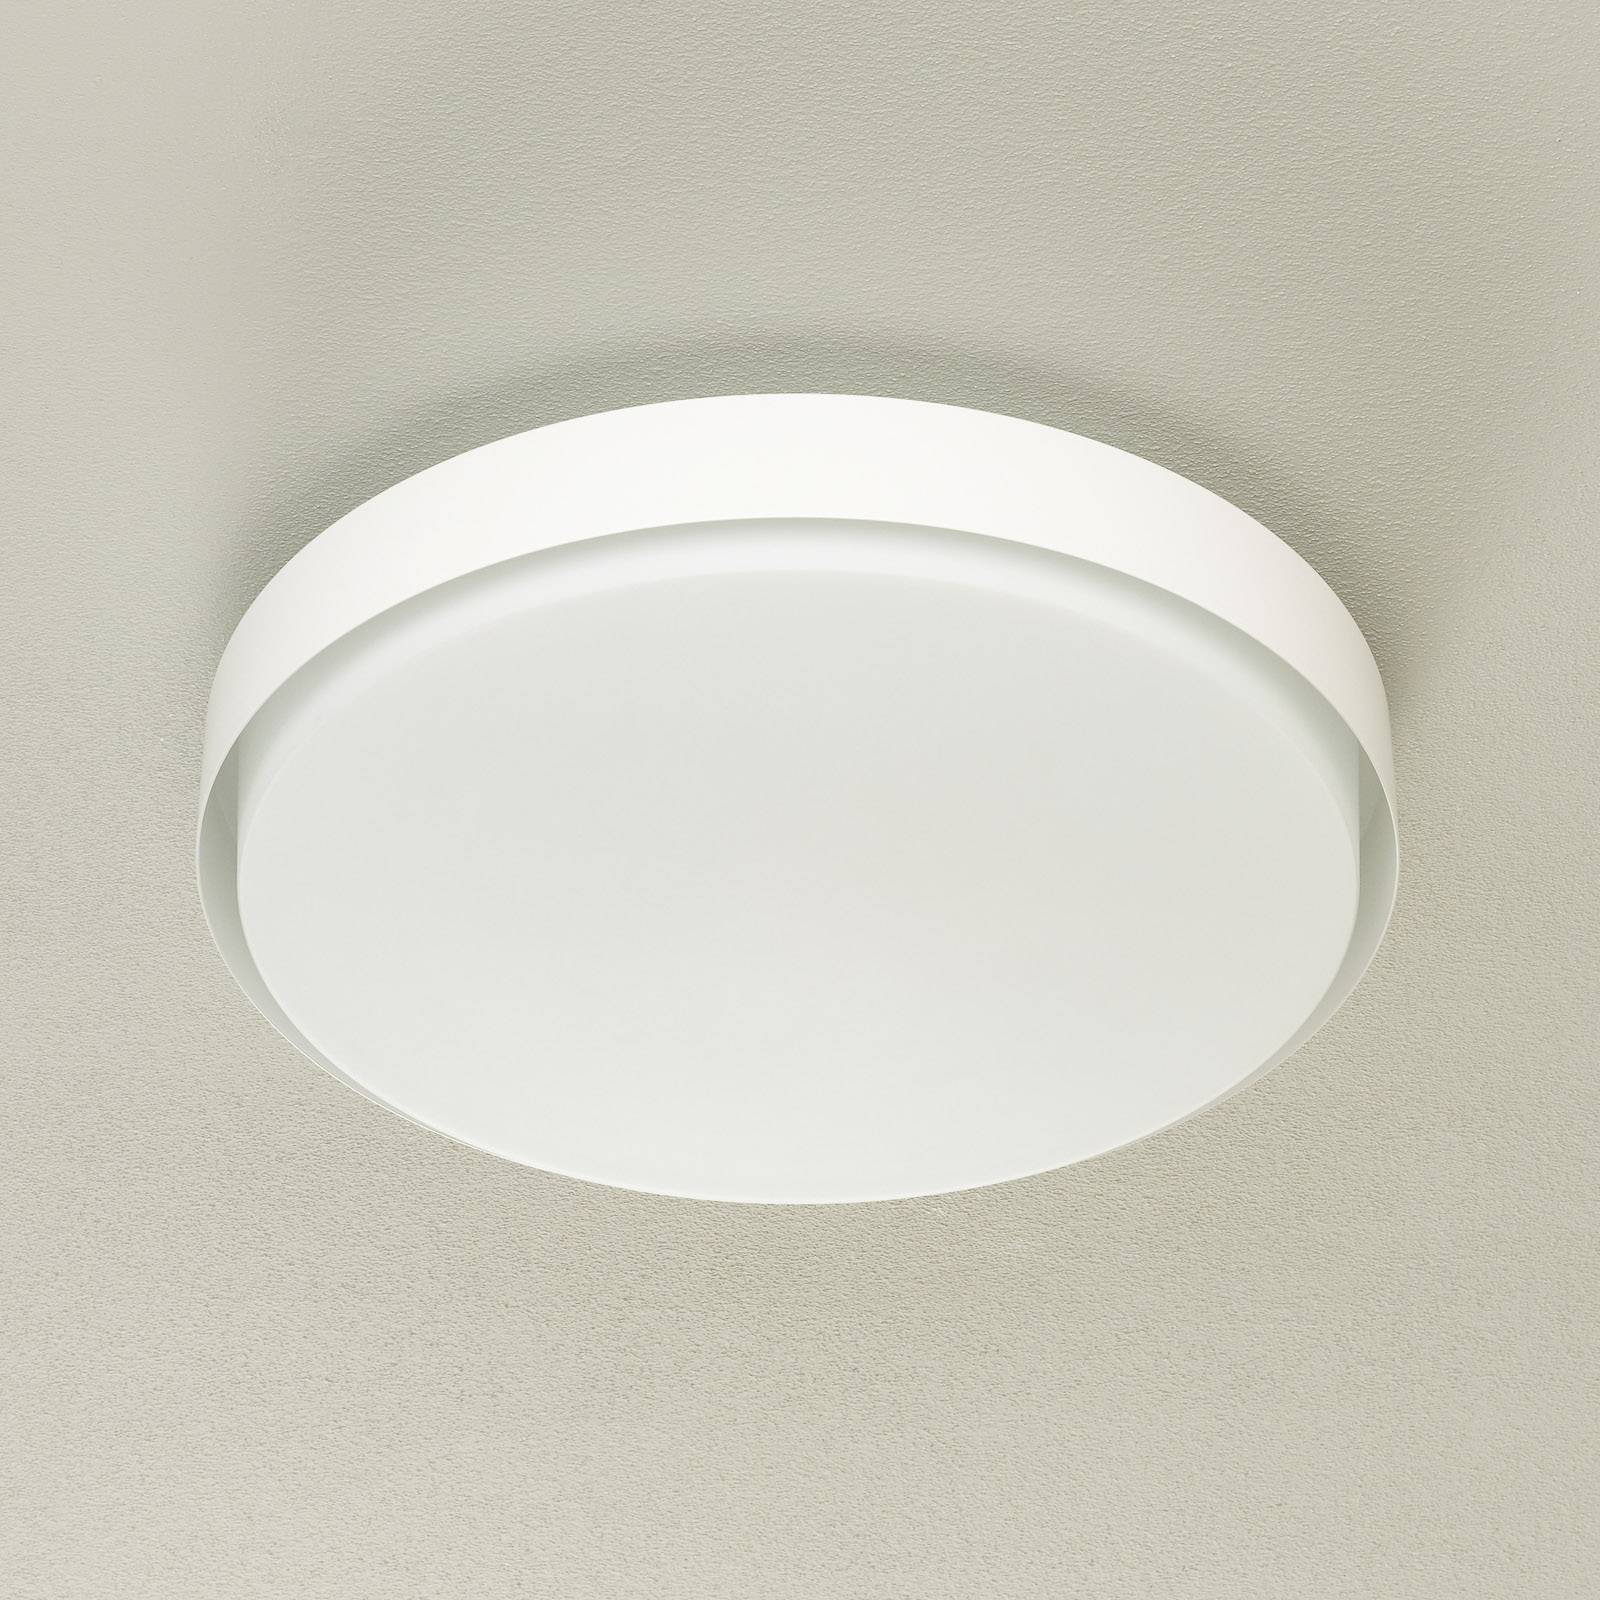 BEGA 12165 lampa sufitowa LED biała, Ø 50 cm, DALI